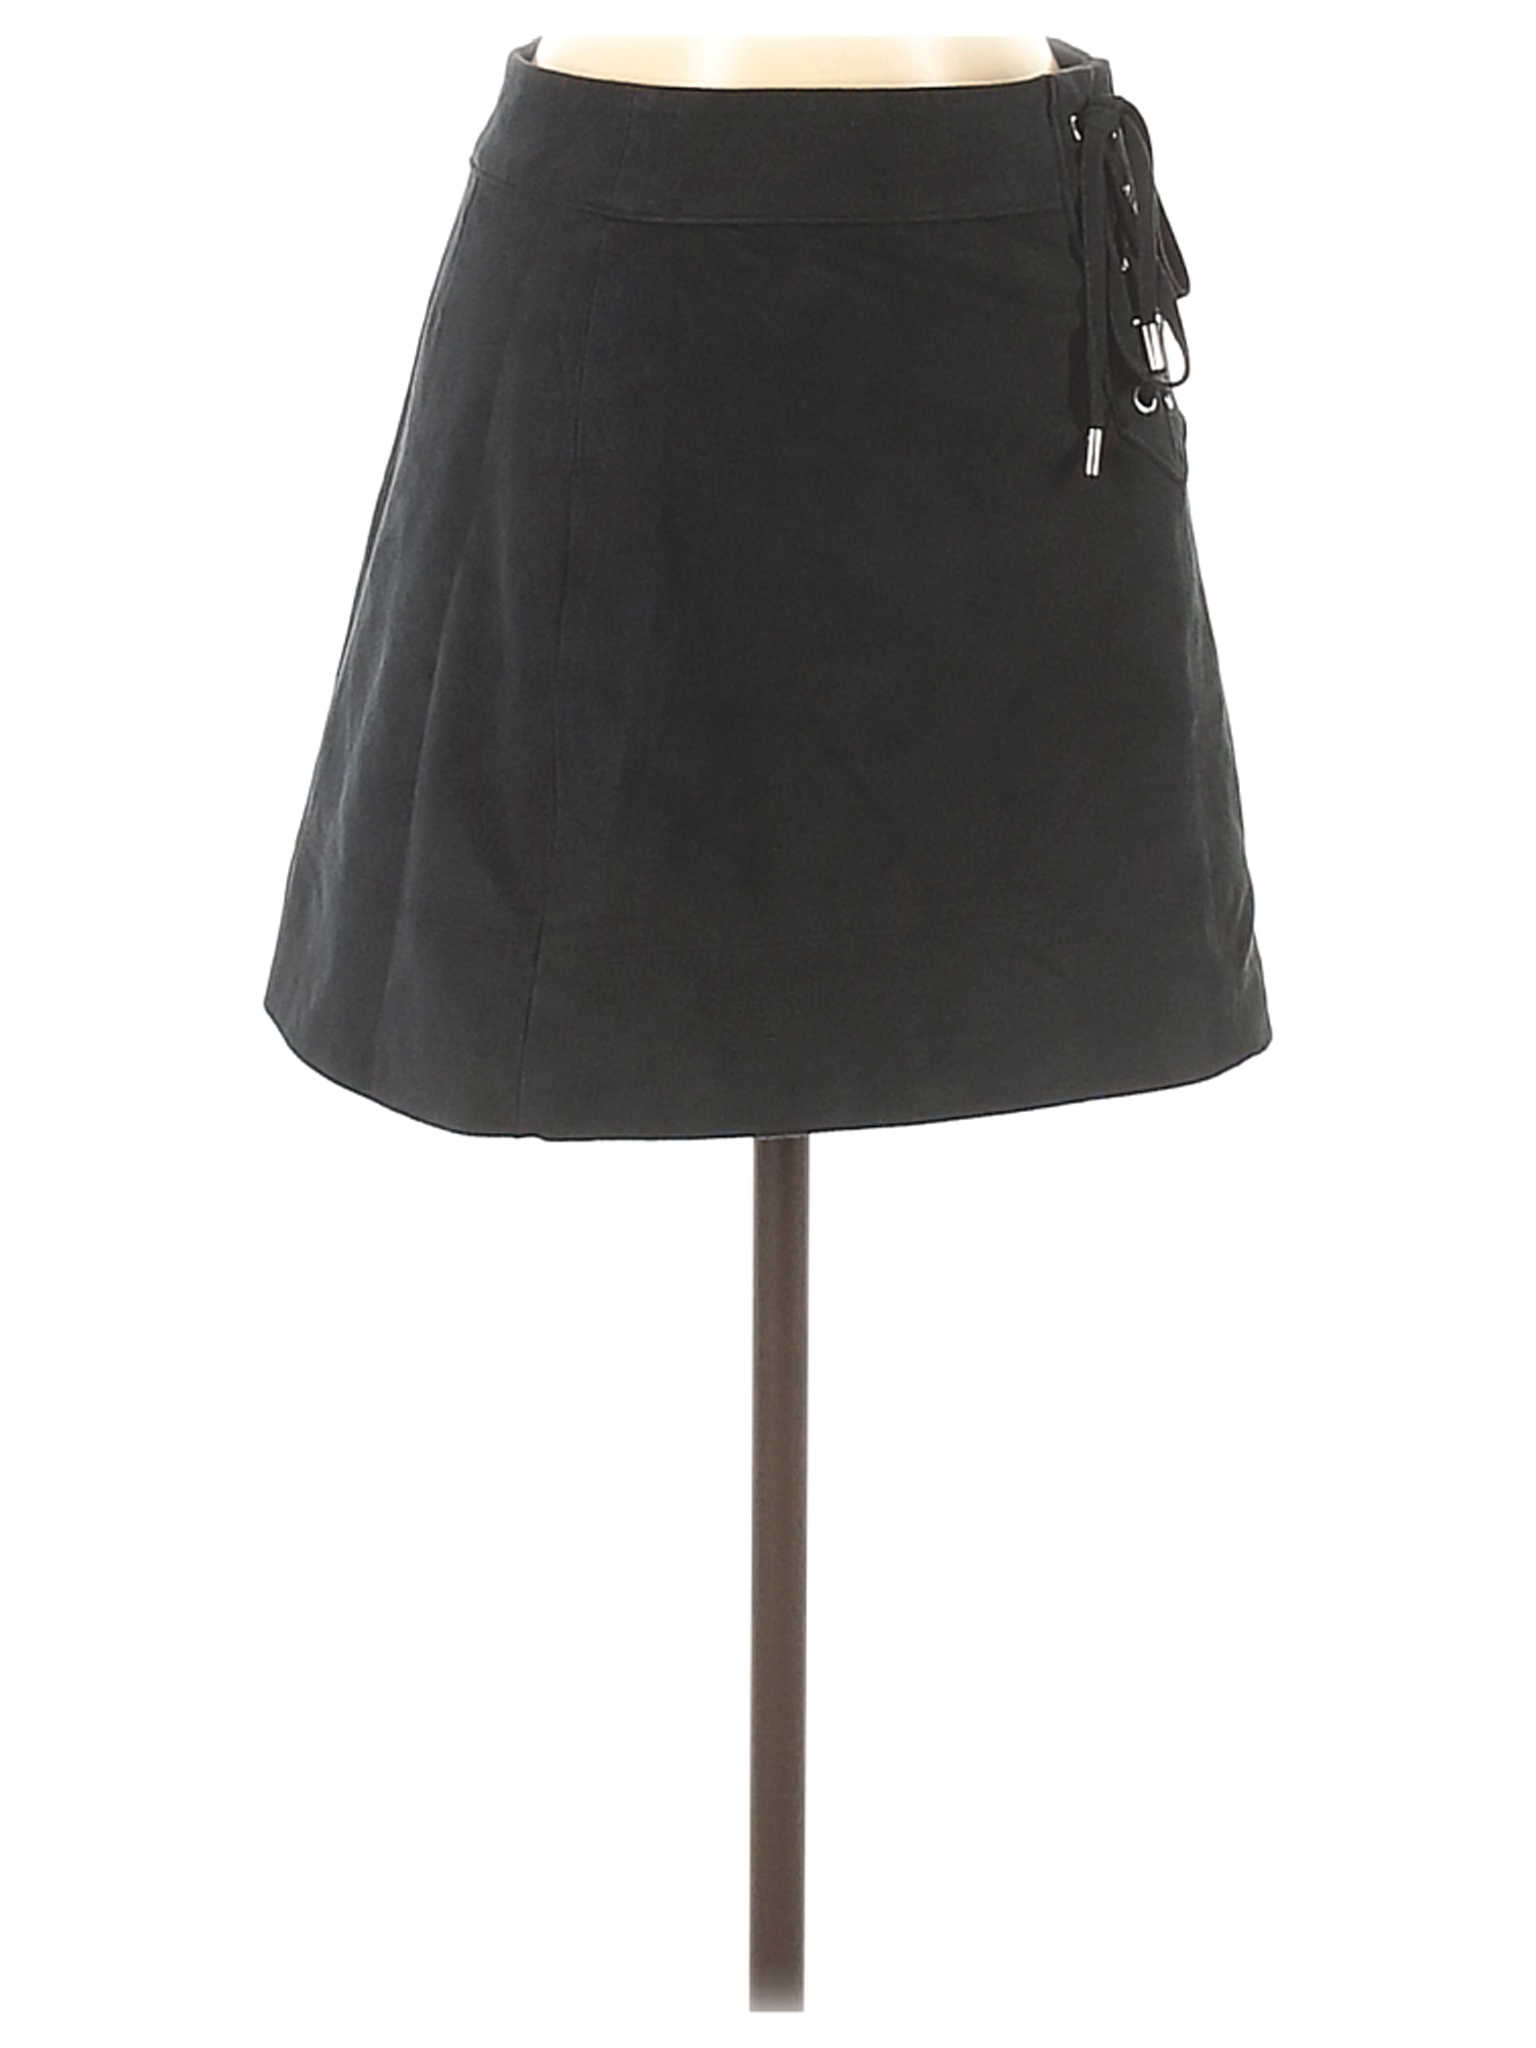 Abercrombie & Fitch Women Black Casual Skirt 0 | eBay